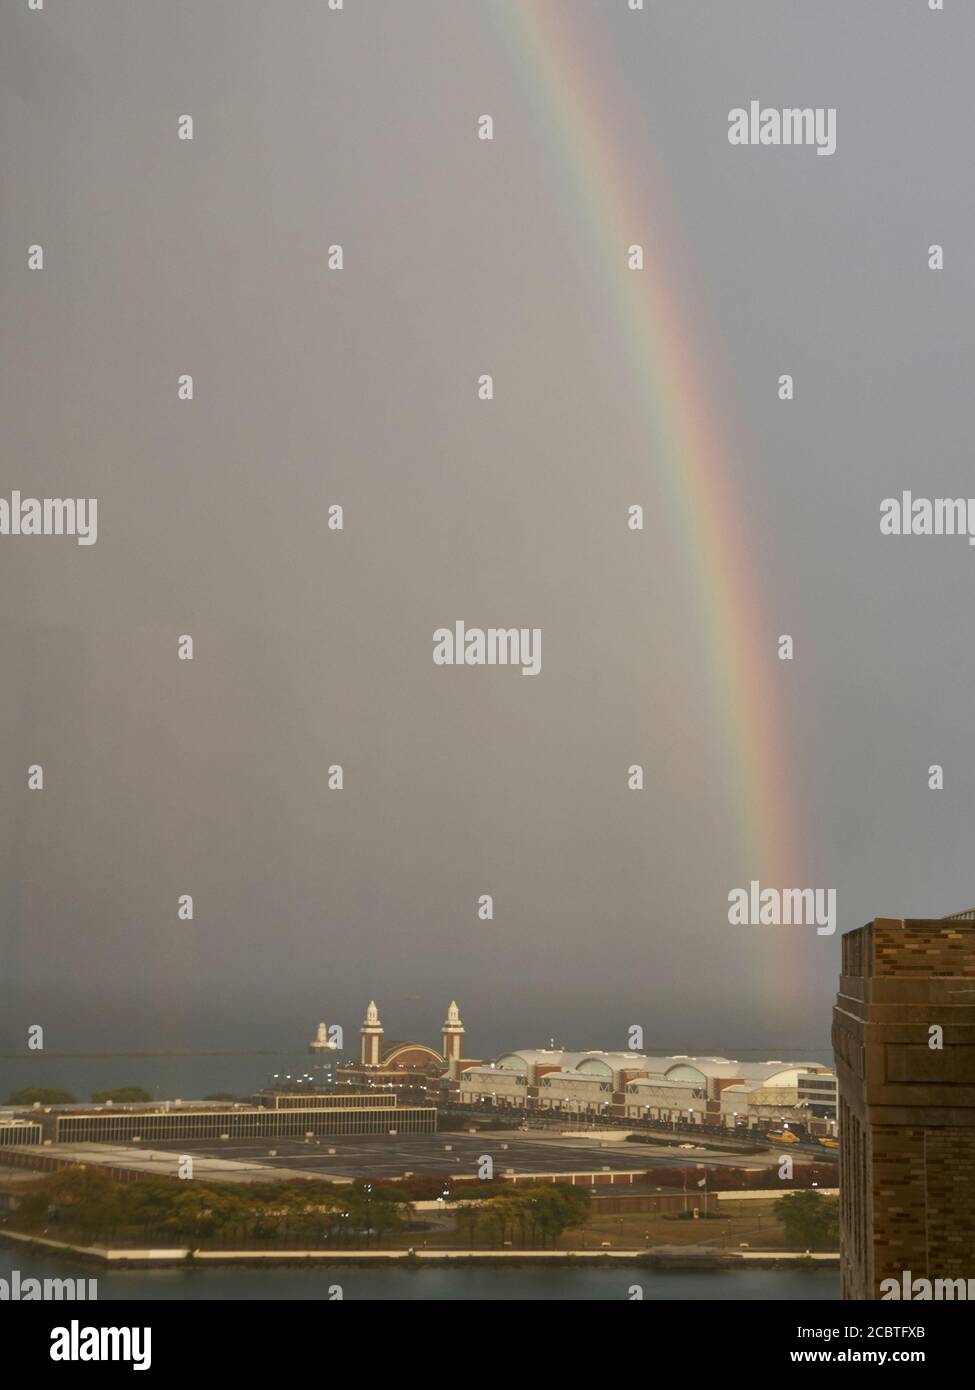 Chicago Lakefront with rainbow Stock Photo